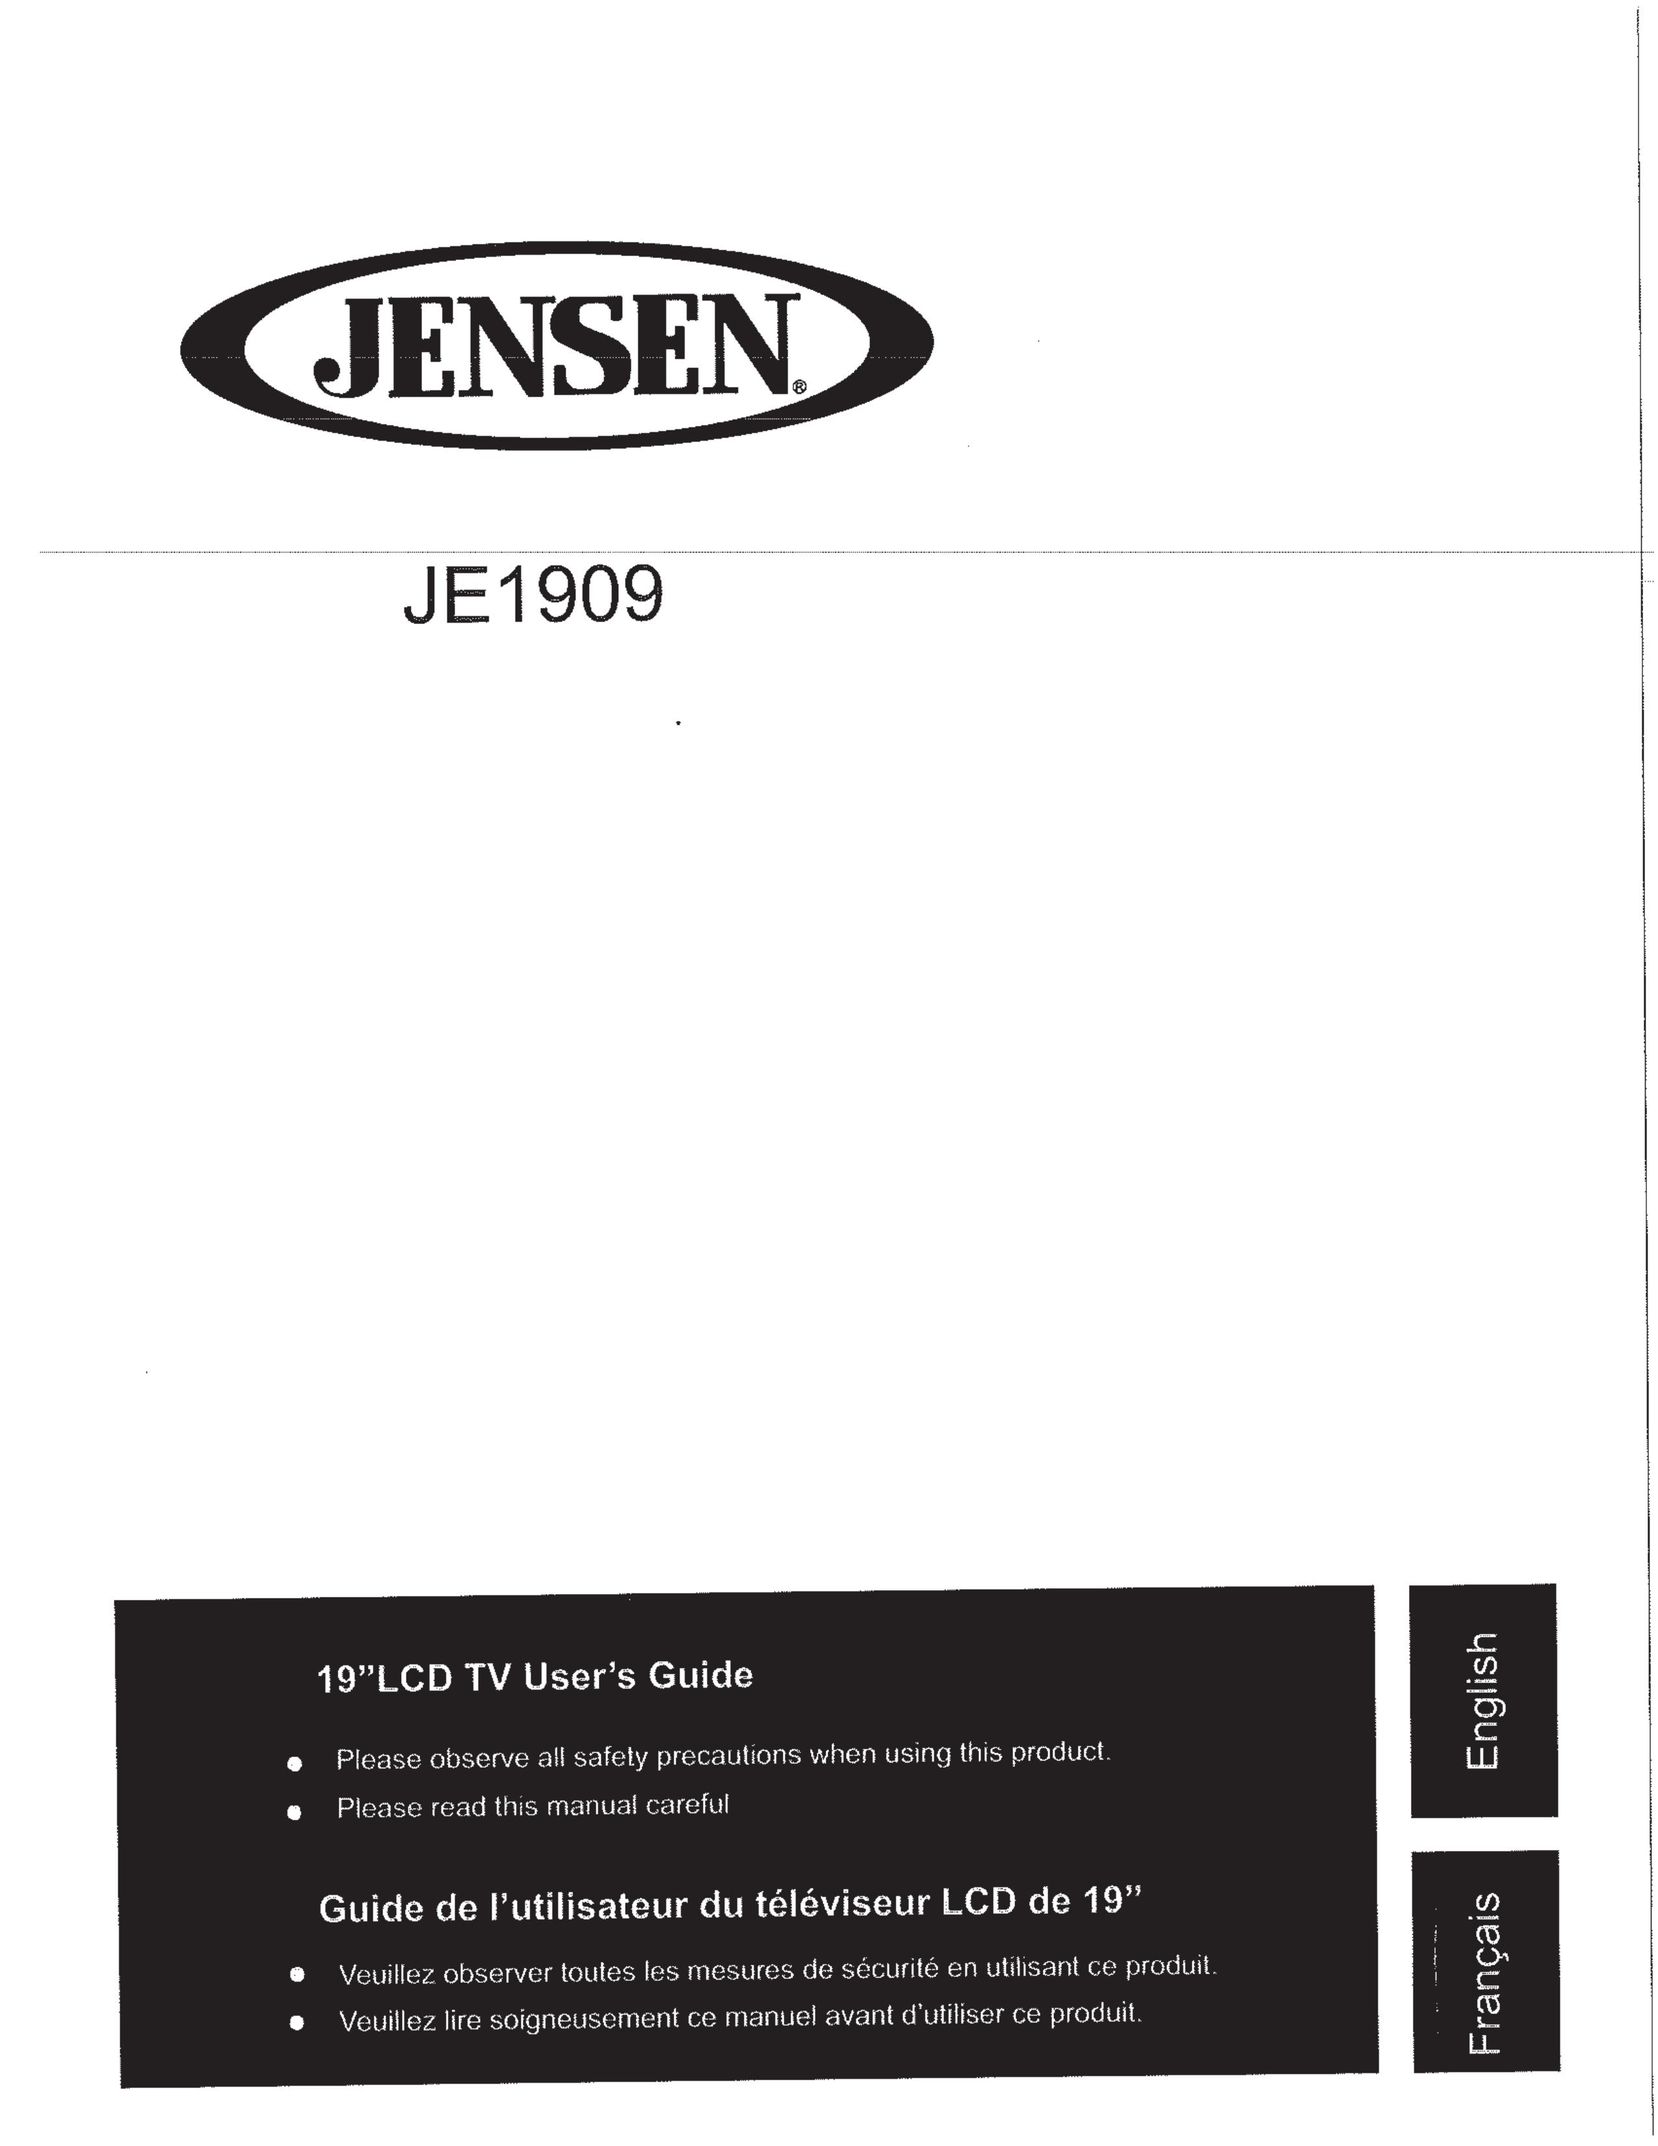 Jensen JE1909 Flat Panel Television User Manual